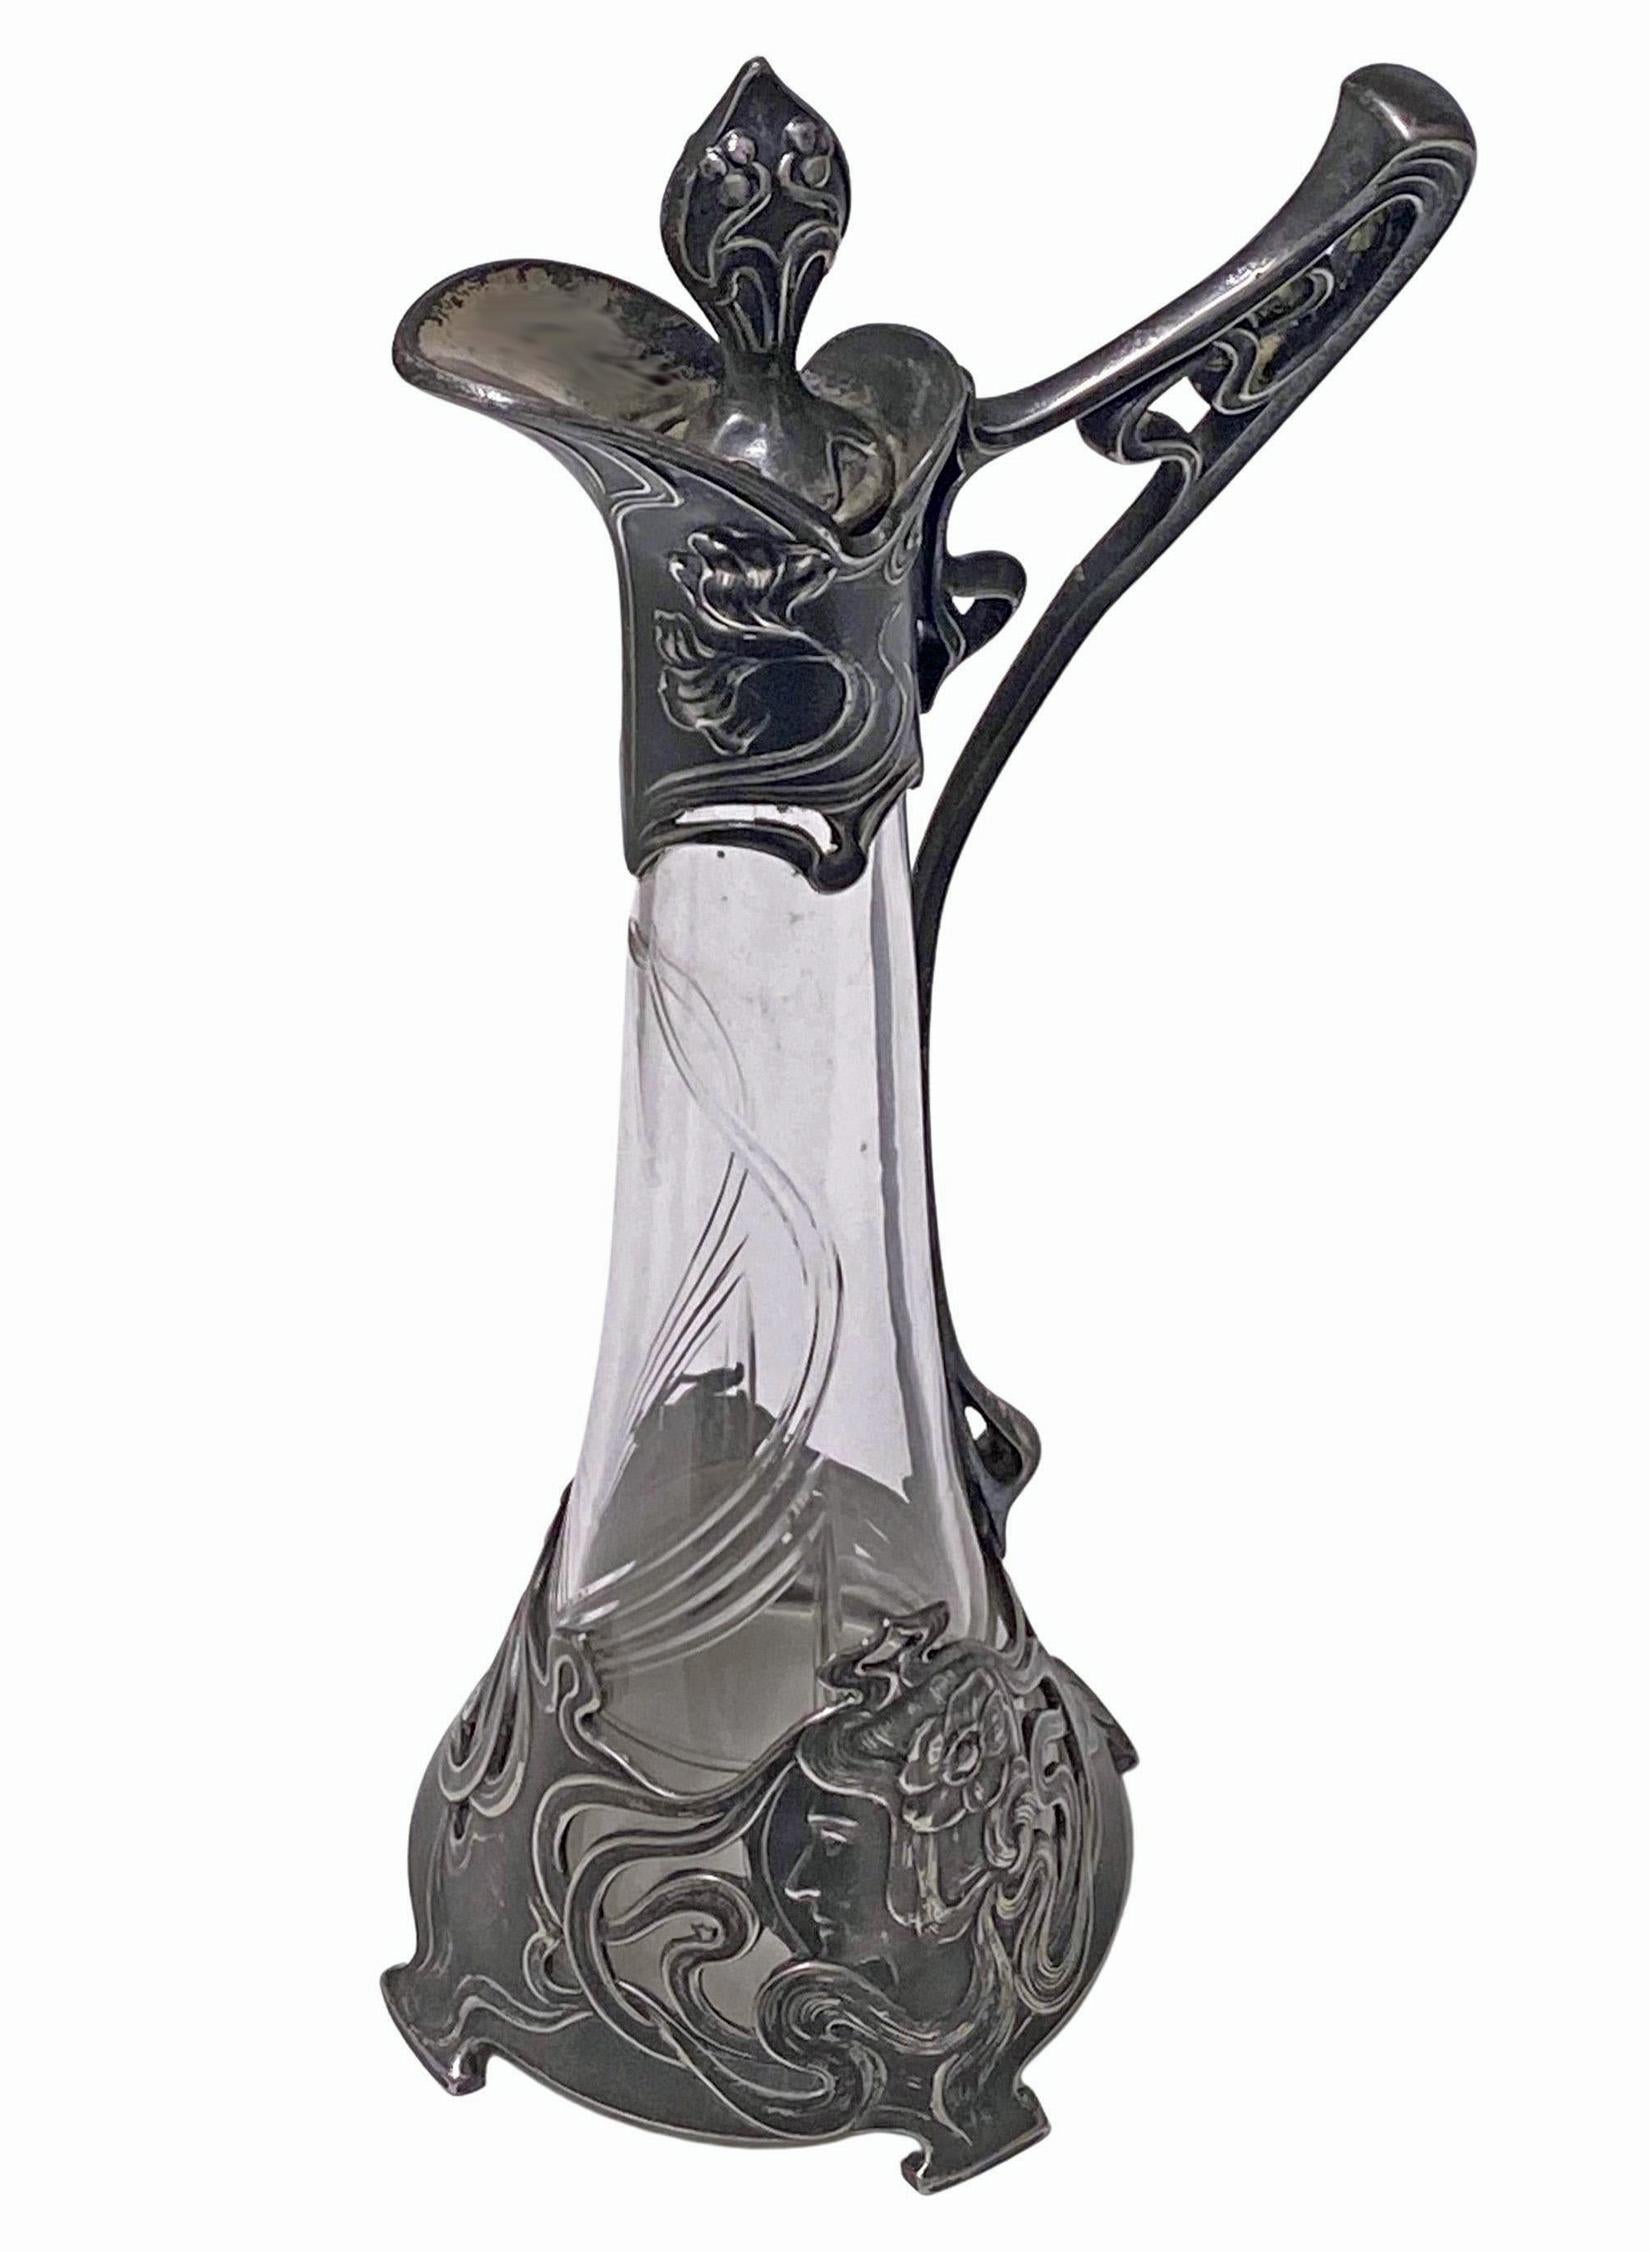 WMF Jugendstil Art Nouveau Liqueur jug, C. 1900. Jugendstil Metalwork featuring Art Nouveau motifs of maiden and floral design both on the metal and on the cut glass crystal body, a WMF iconic design. Excellent antique condition, antique silver